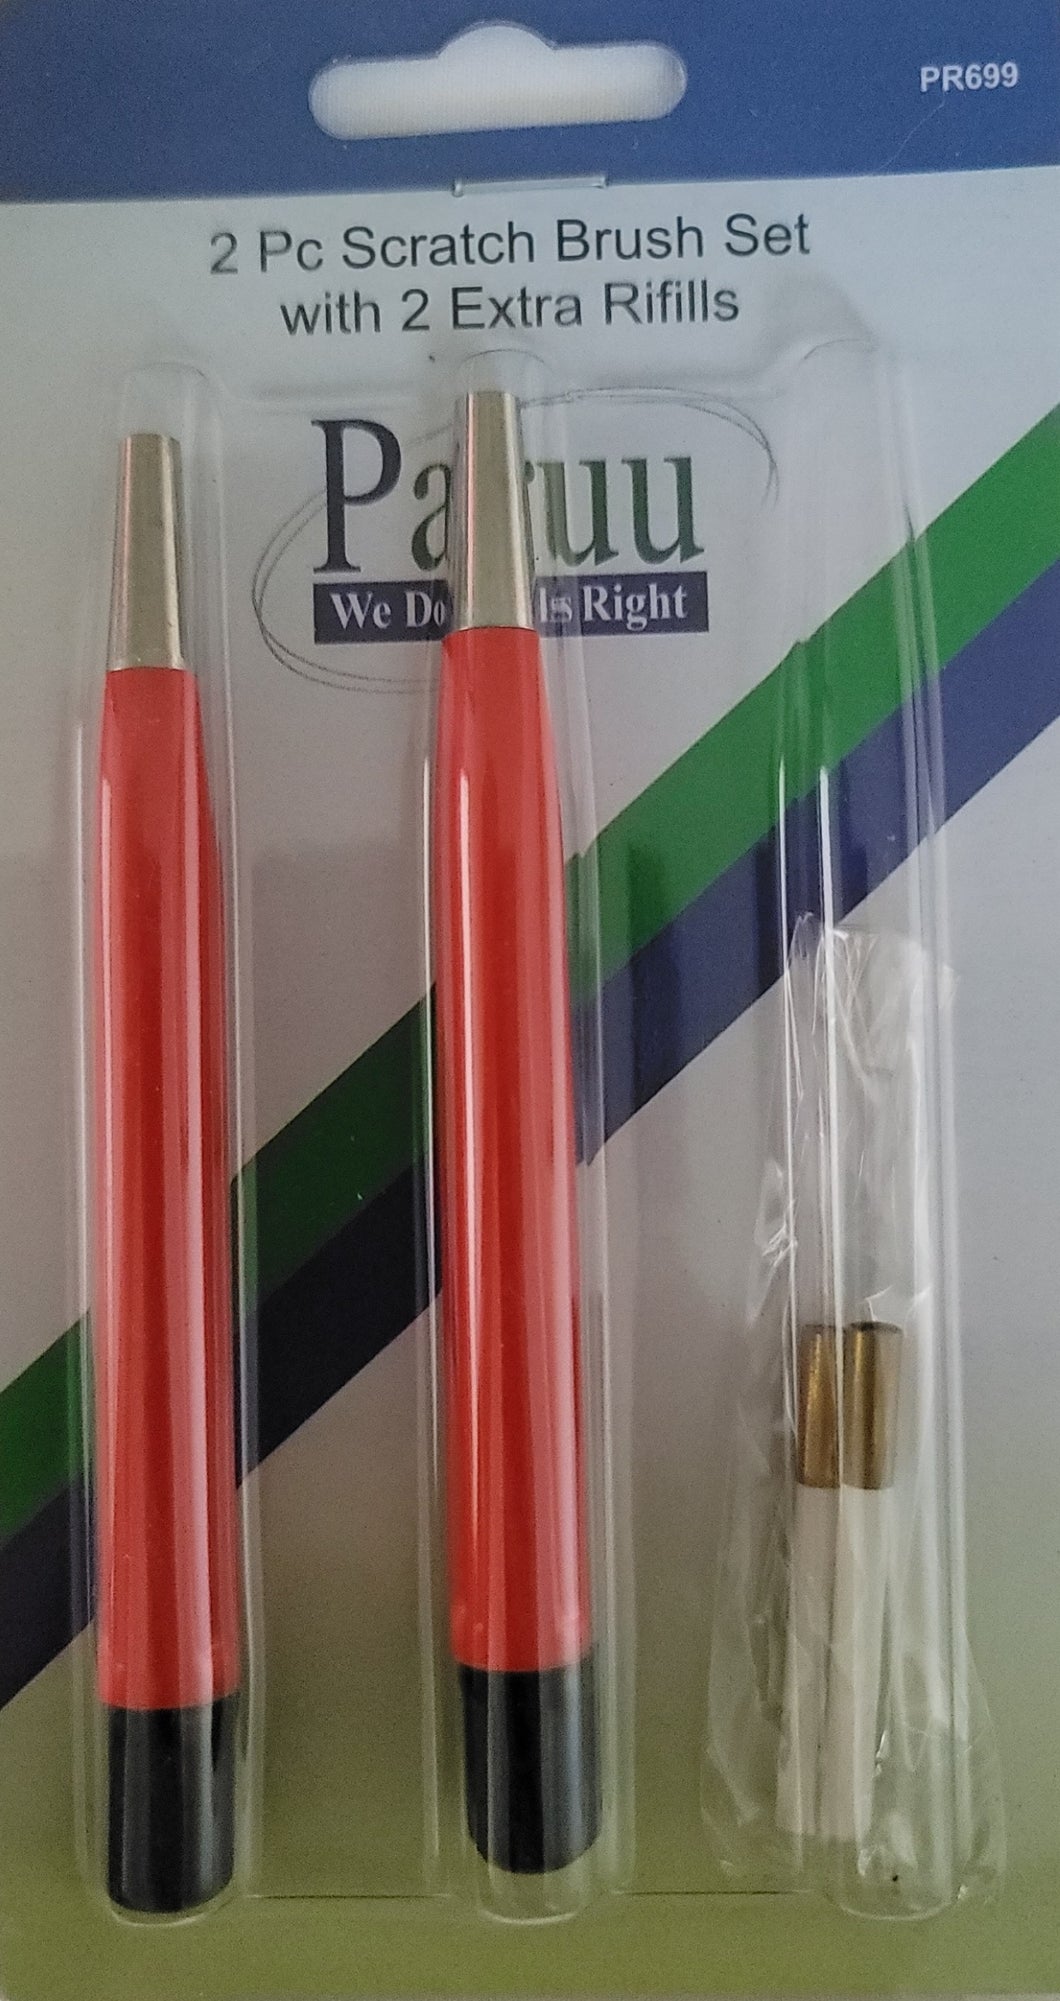 PARUU® 4 Pcs value set of Scratch Brushes with Fiberglass Bristle and Refills